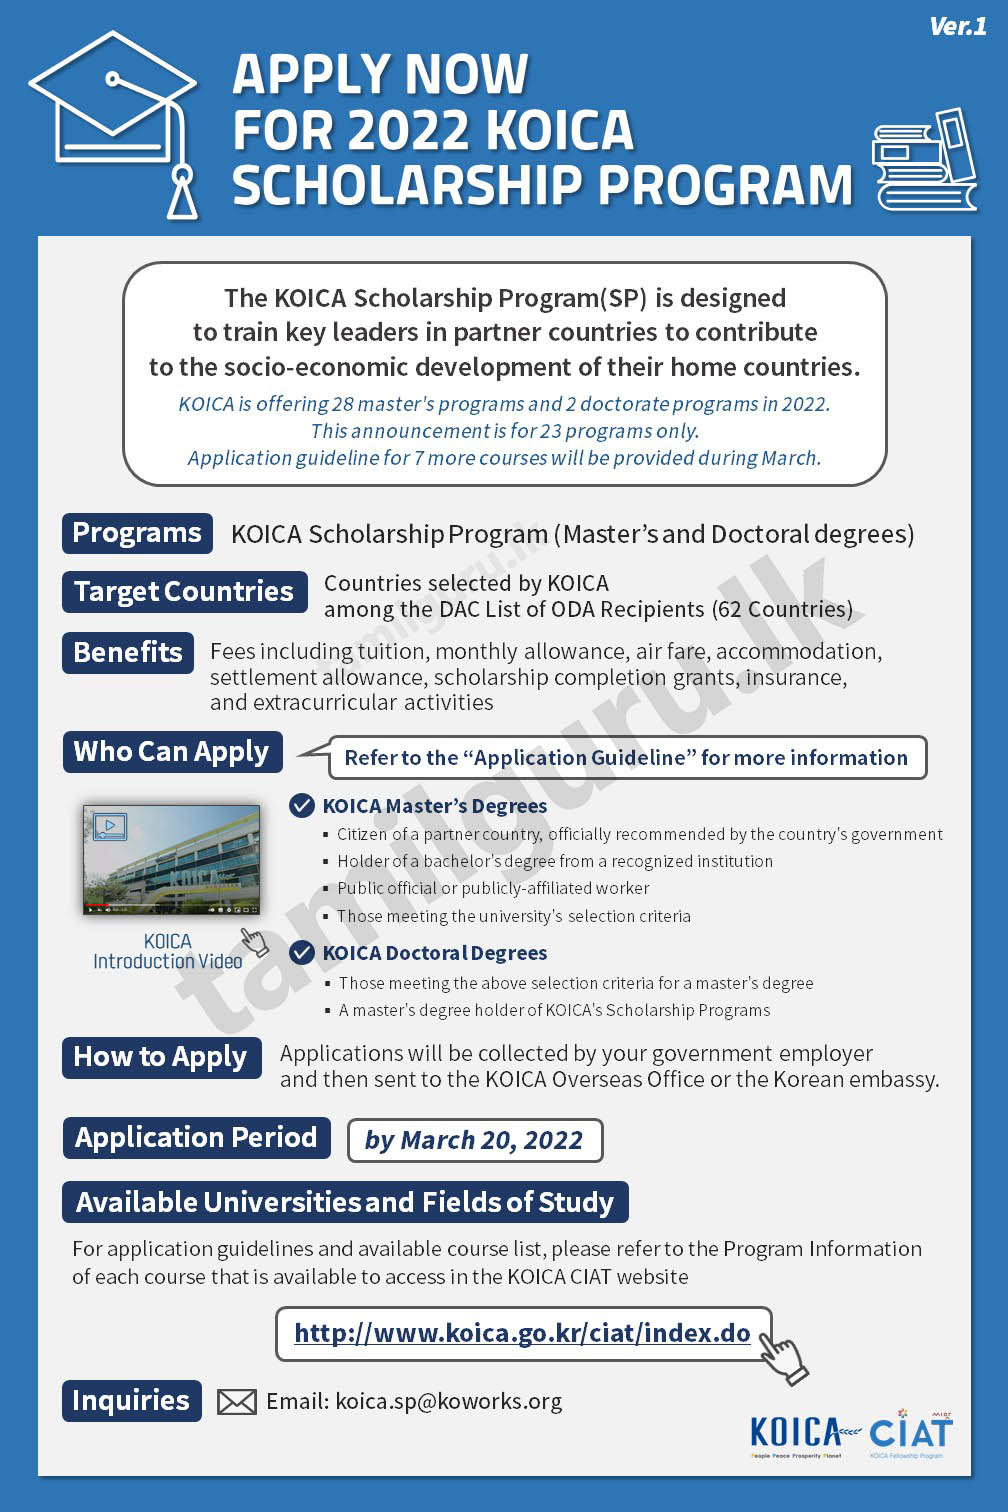 KOICA (Korea International Cooperation Agency) Scholarship Program 2022